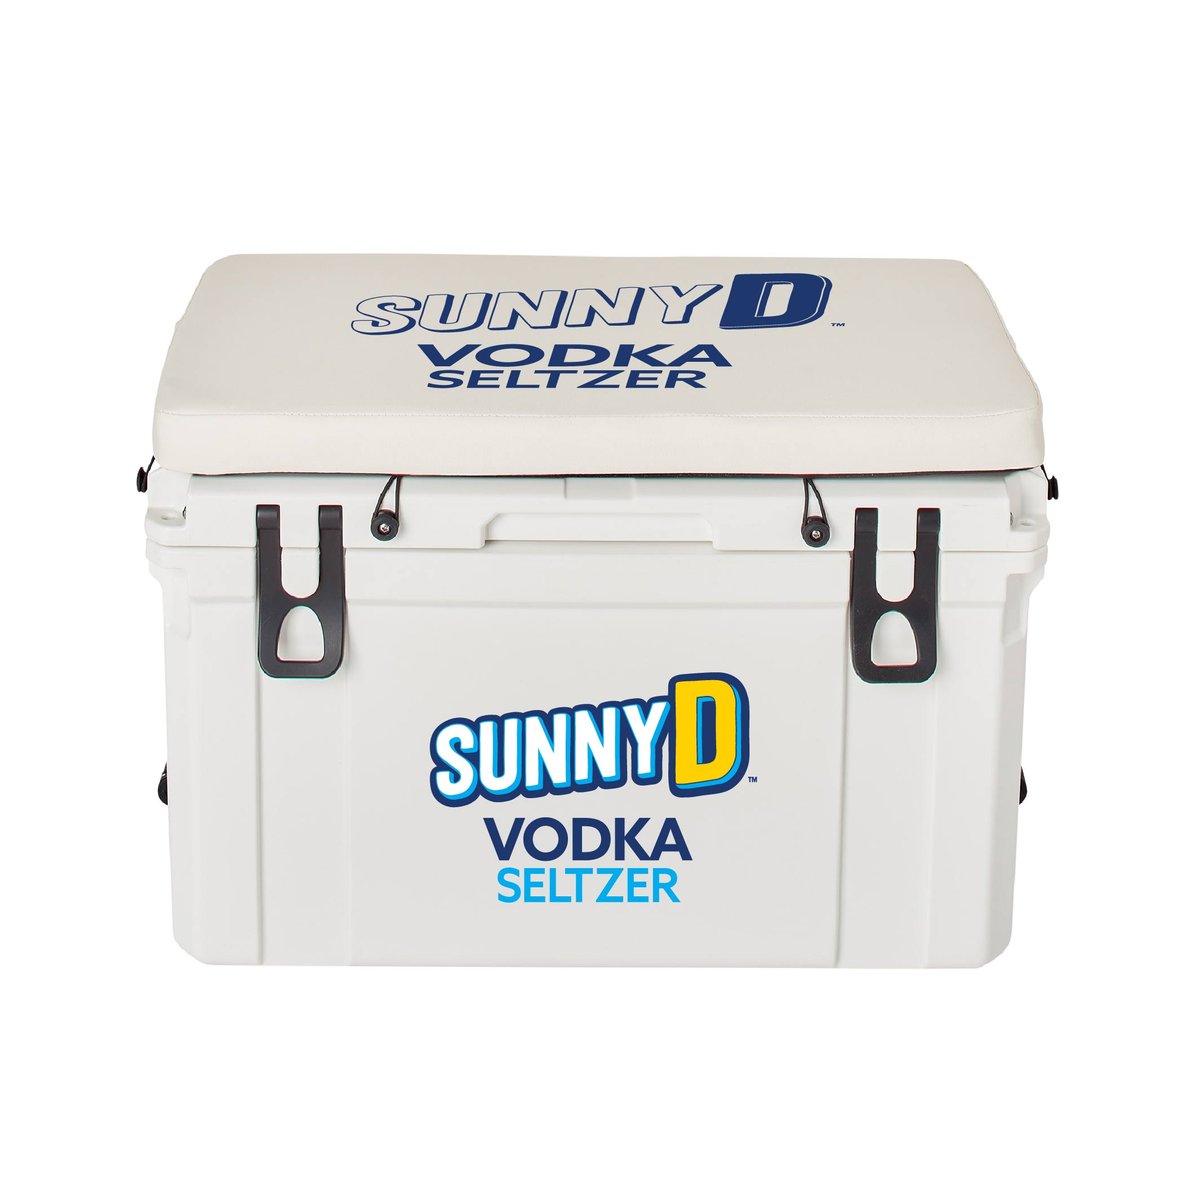 Sunny-D-Vodka-cooler